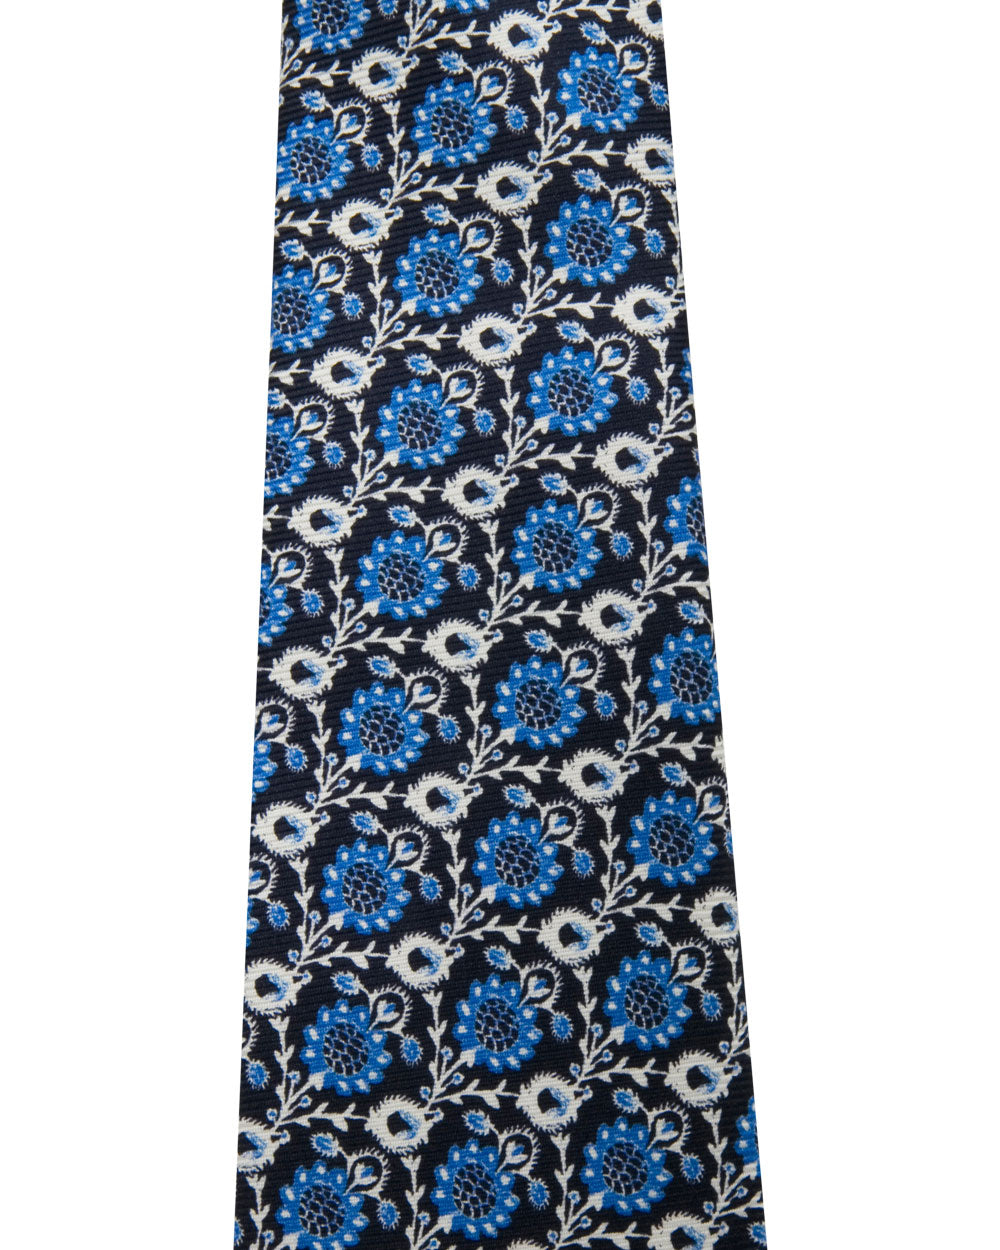 Blue and White Foliage Print Tie